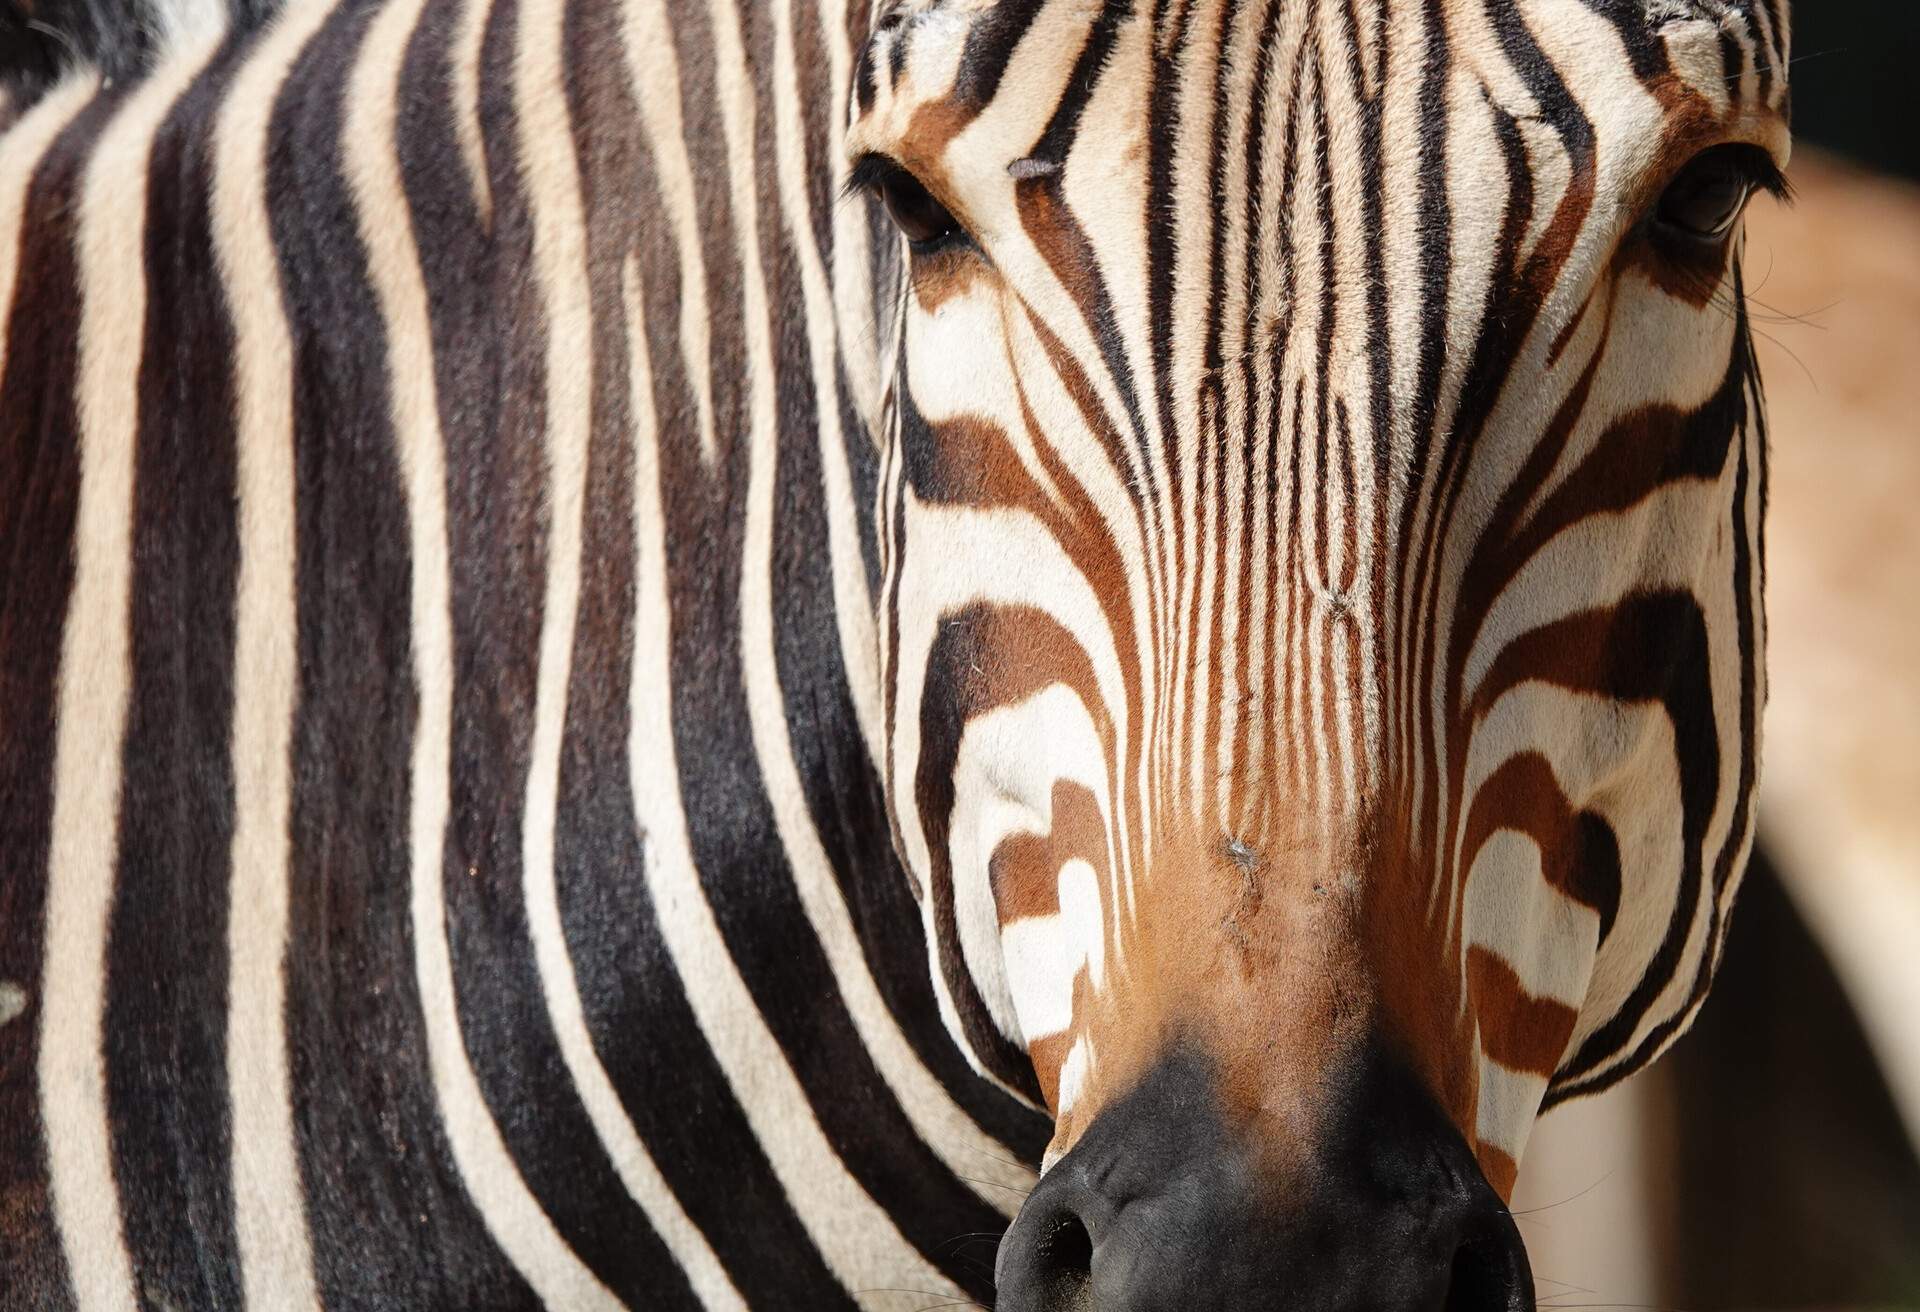 A striking zebra with its distinctive black and white stripes.